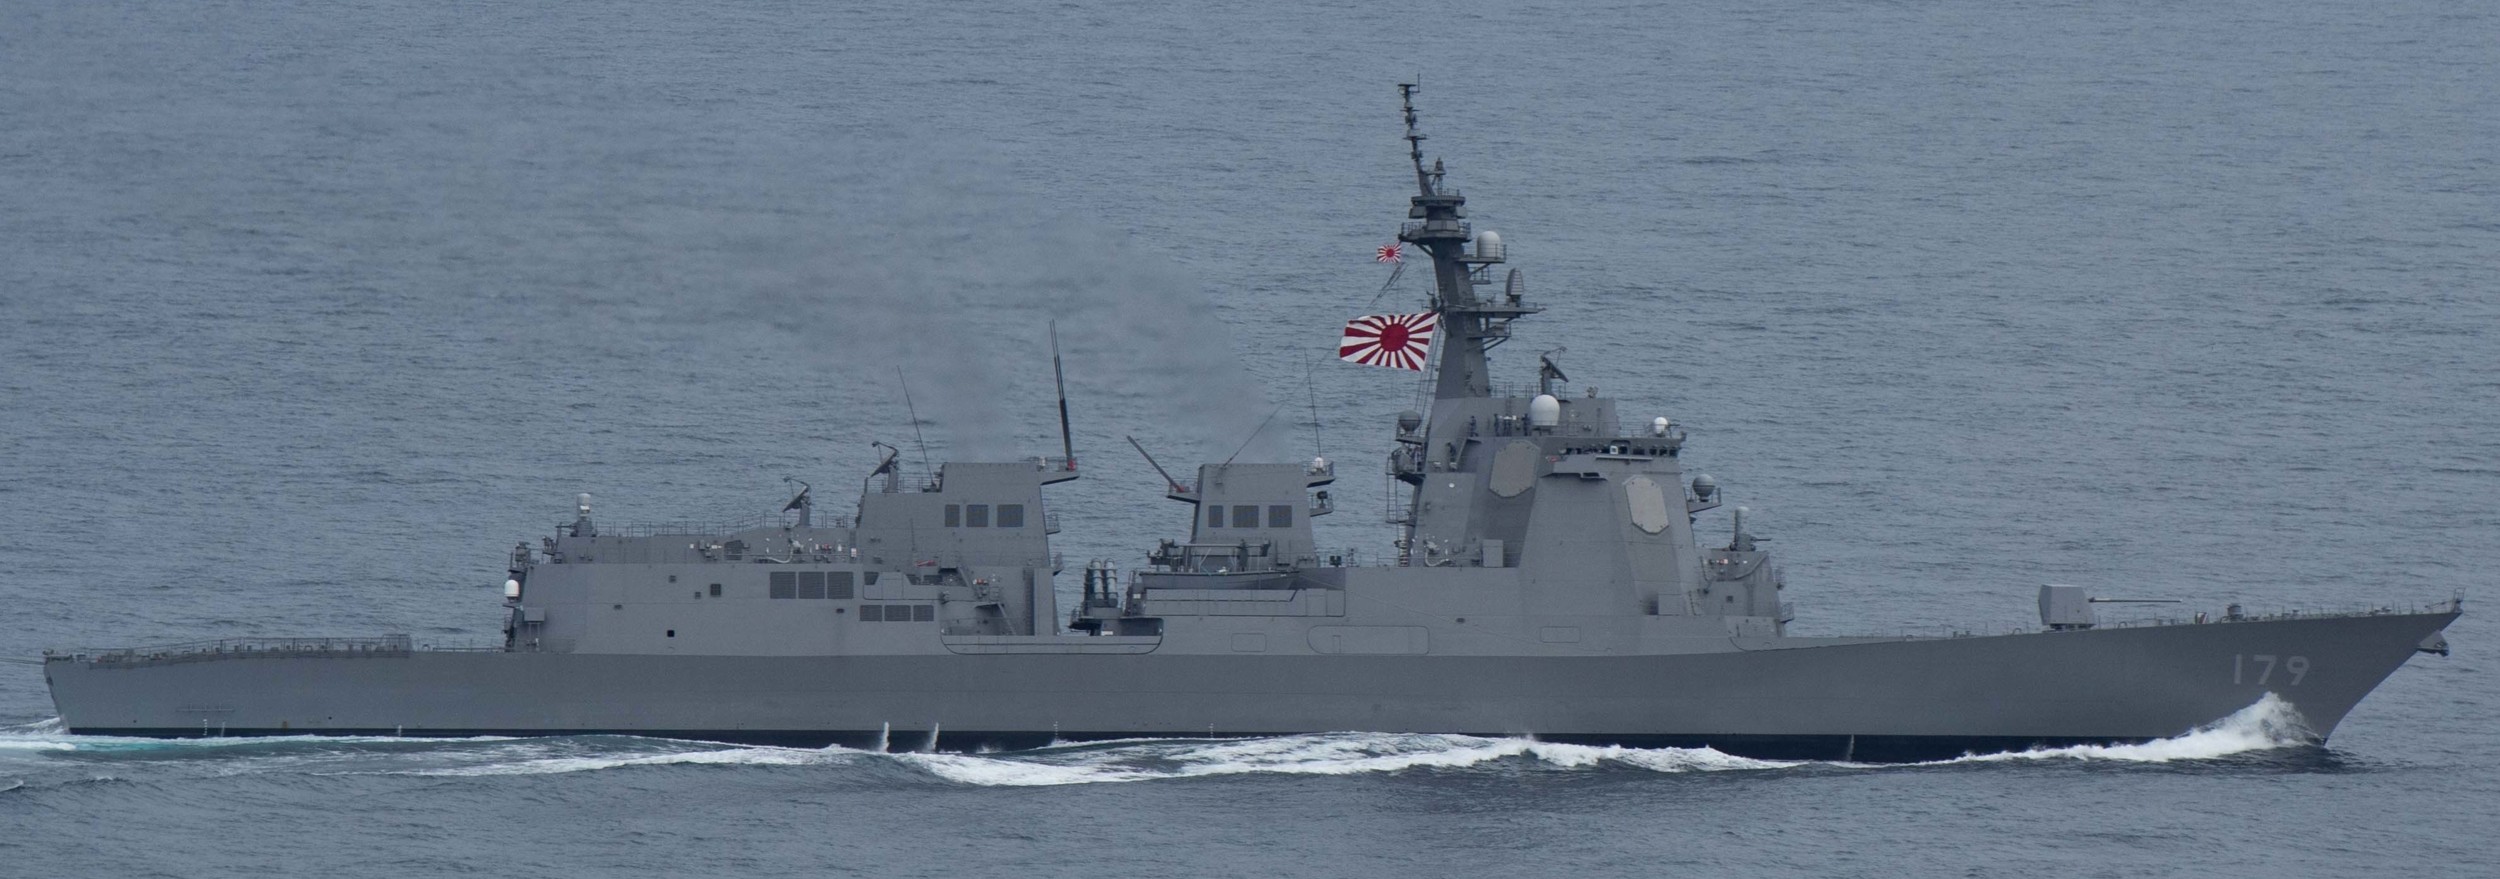 ddg-179 js maya 27dd class guided missile destroyer aegis japan maritime self defense force jmsdf 09